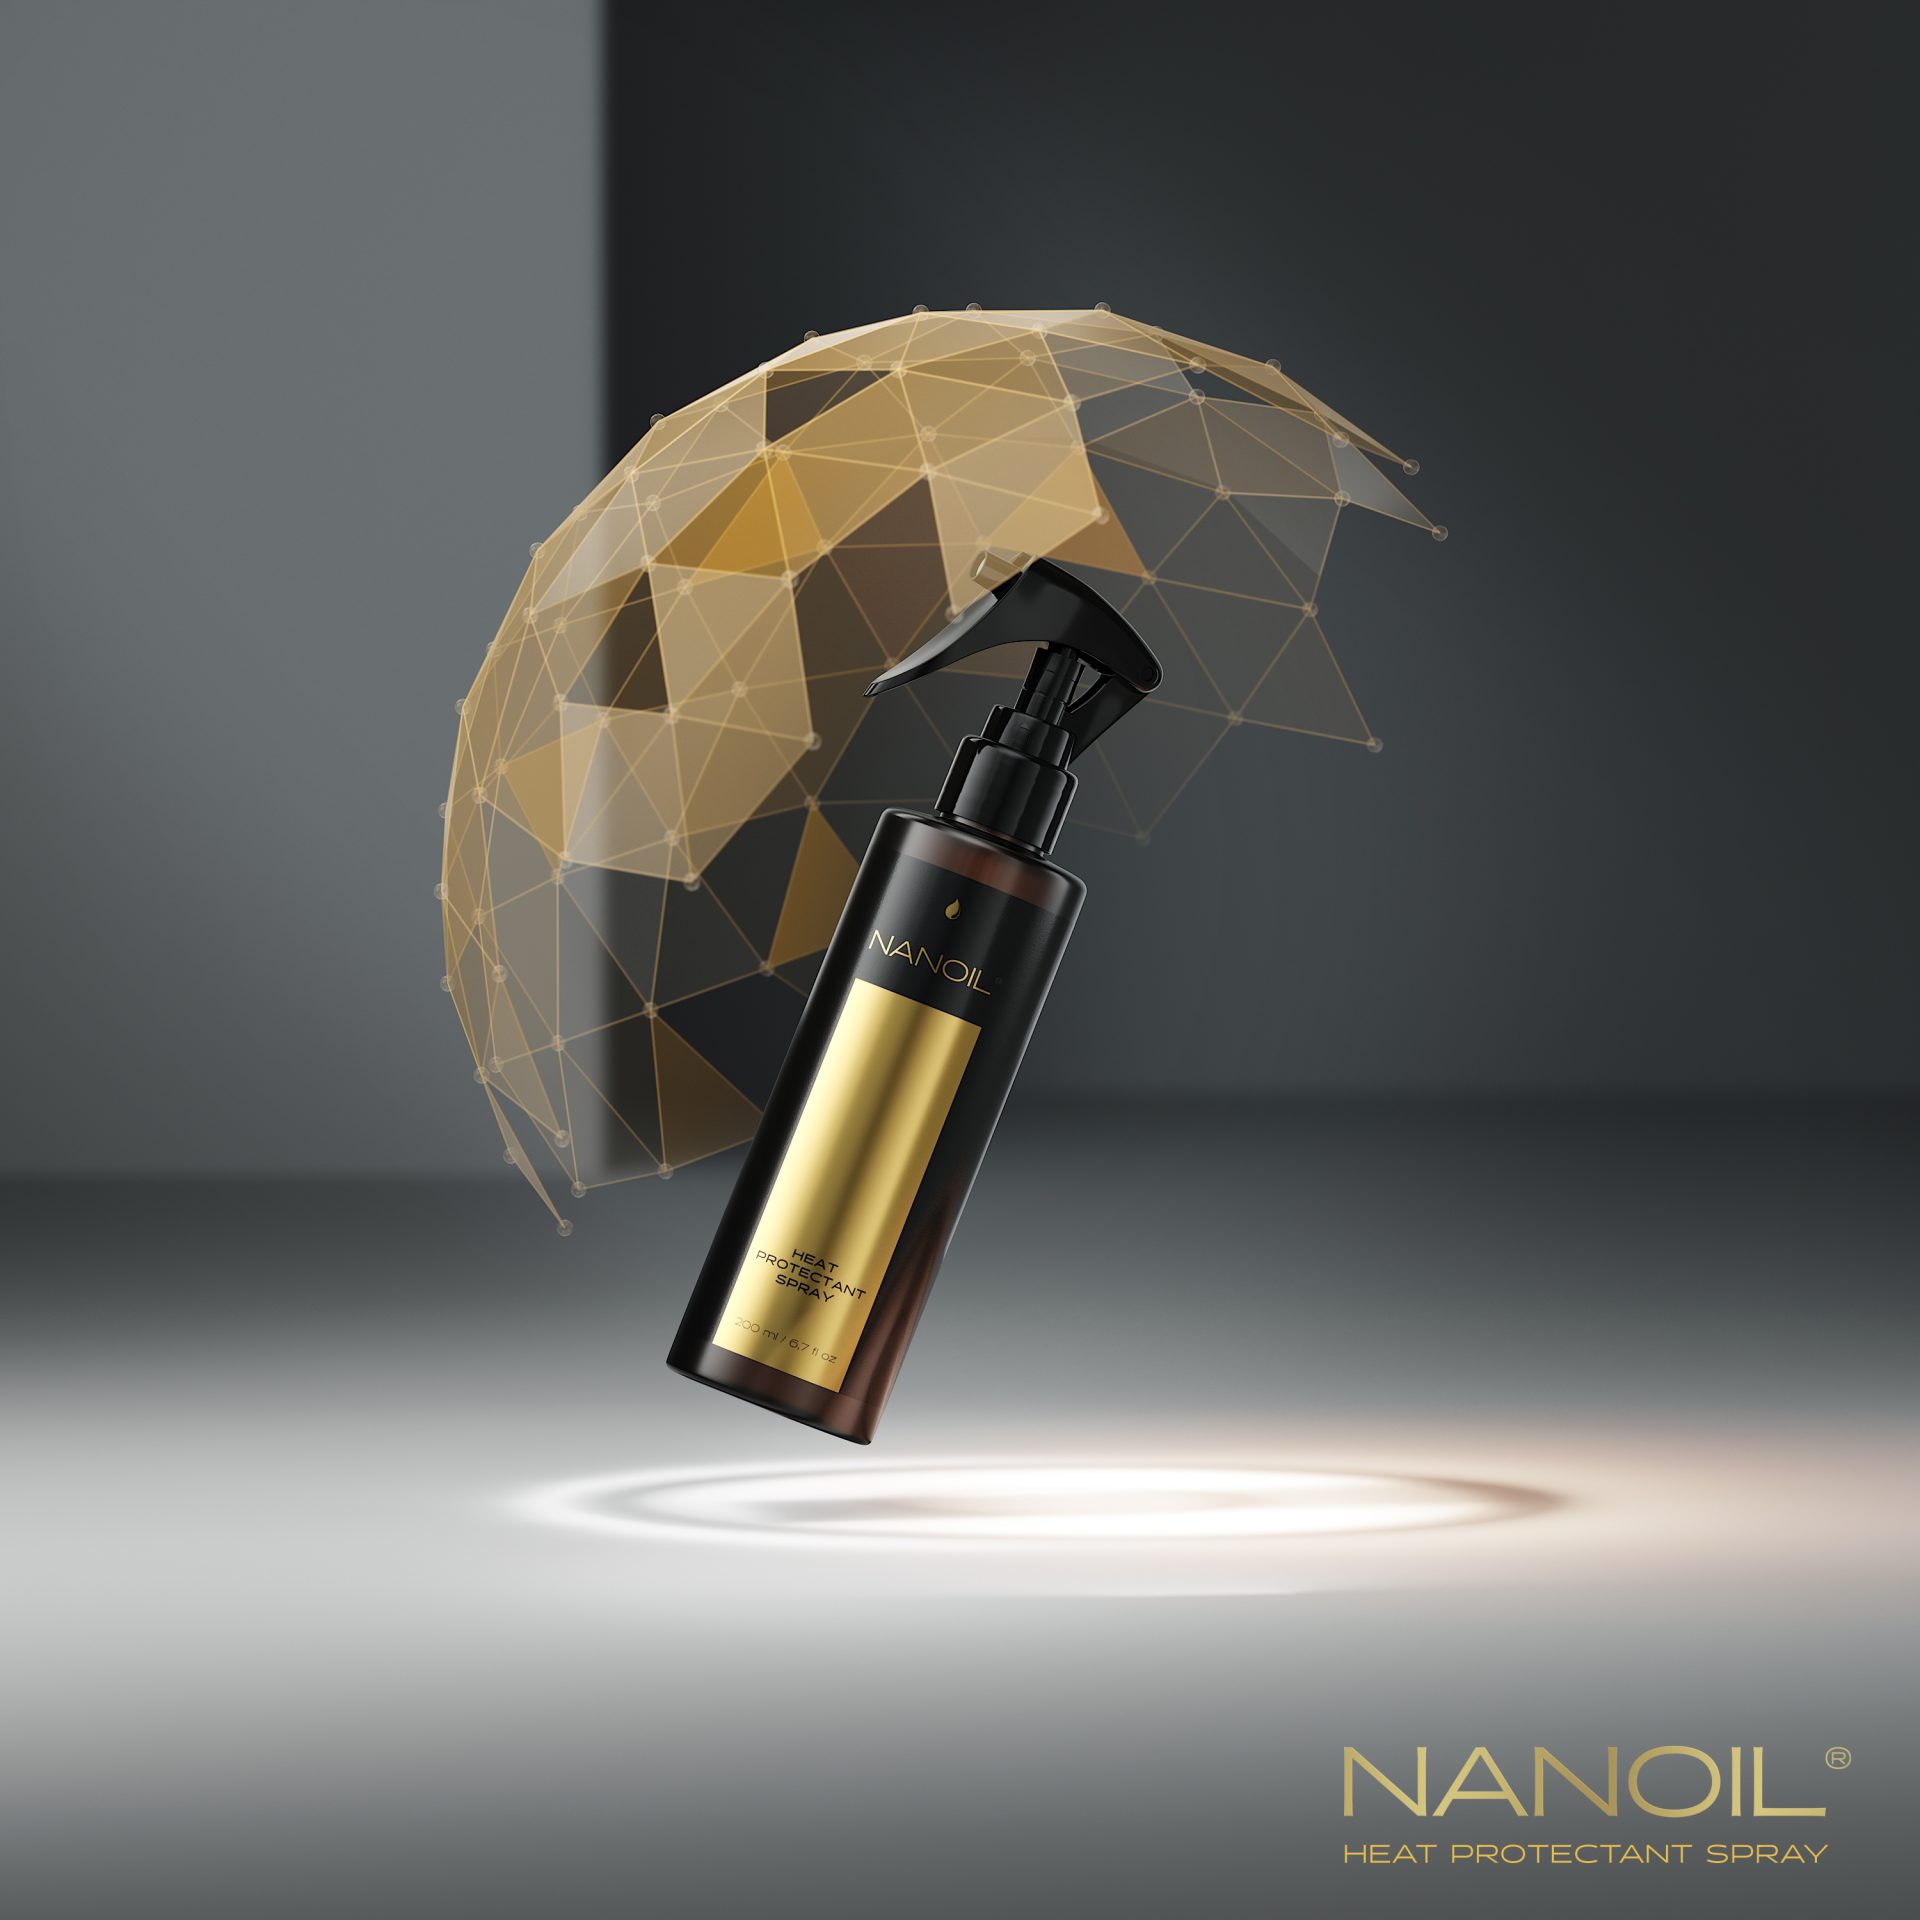 Nanoil Heat Protectant Spray – hit wśród kosmetyków termoochronnych